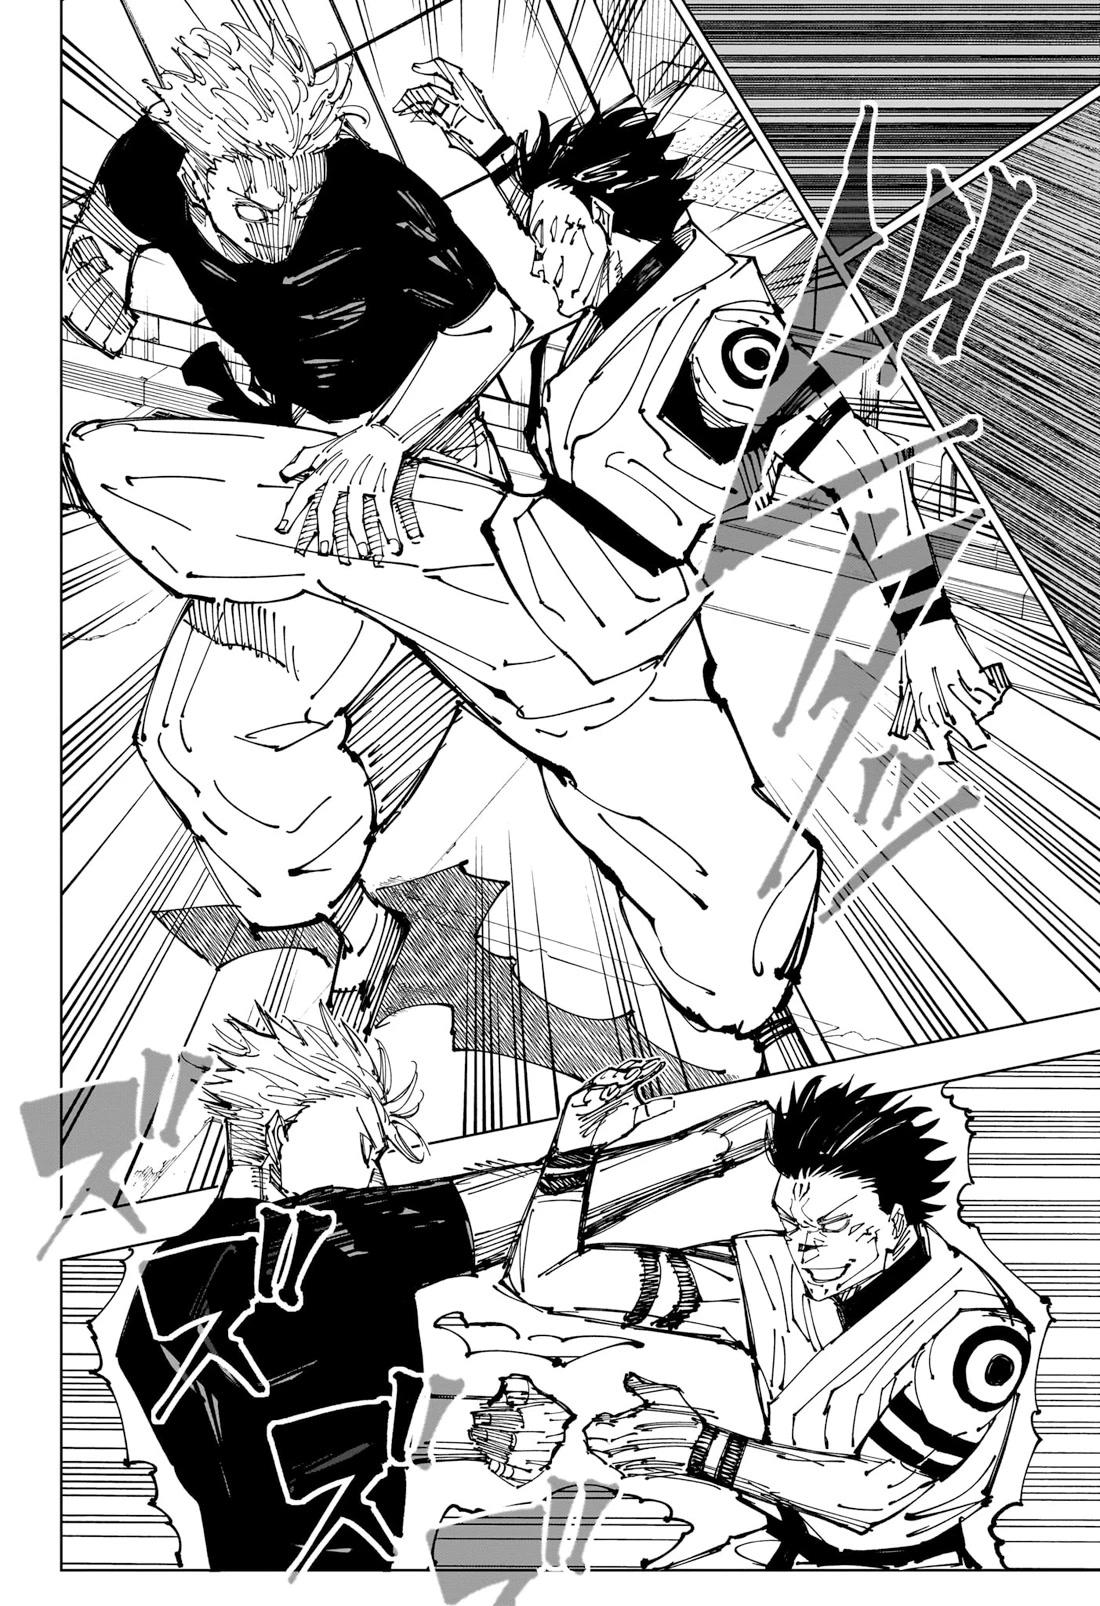 Jujutsu Kaisen Chapter 224: The Decisive Battle In The Uninhabited, Demon-Infested Shinjuku ② page 5 - Mangakakalot